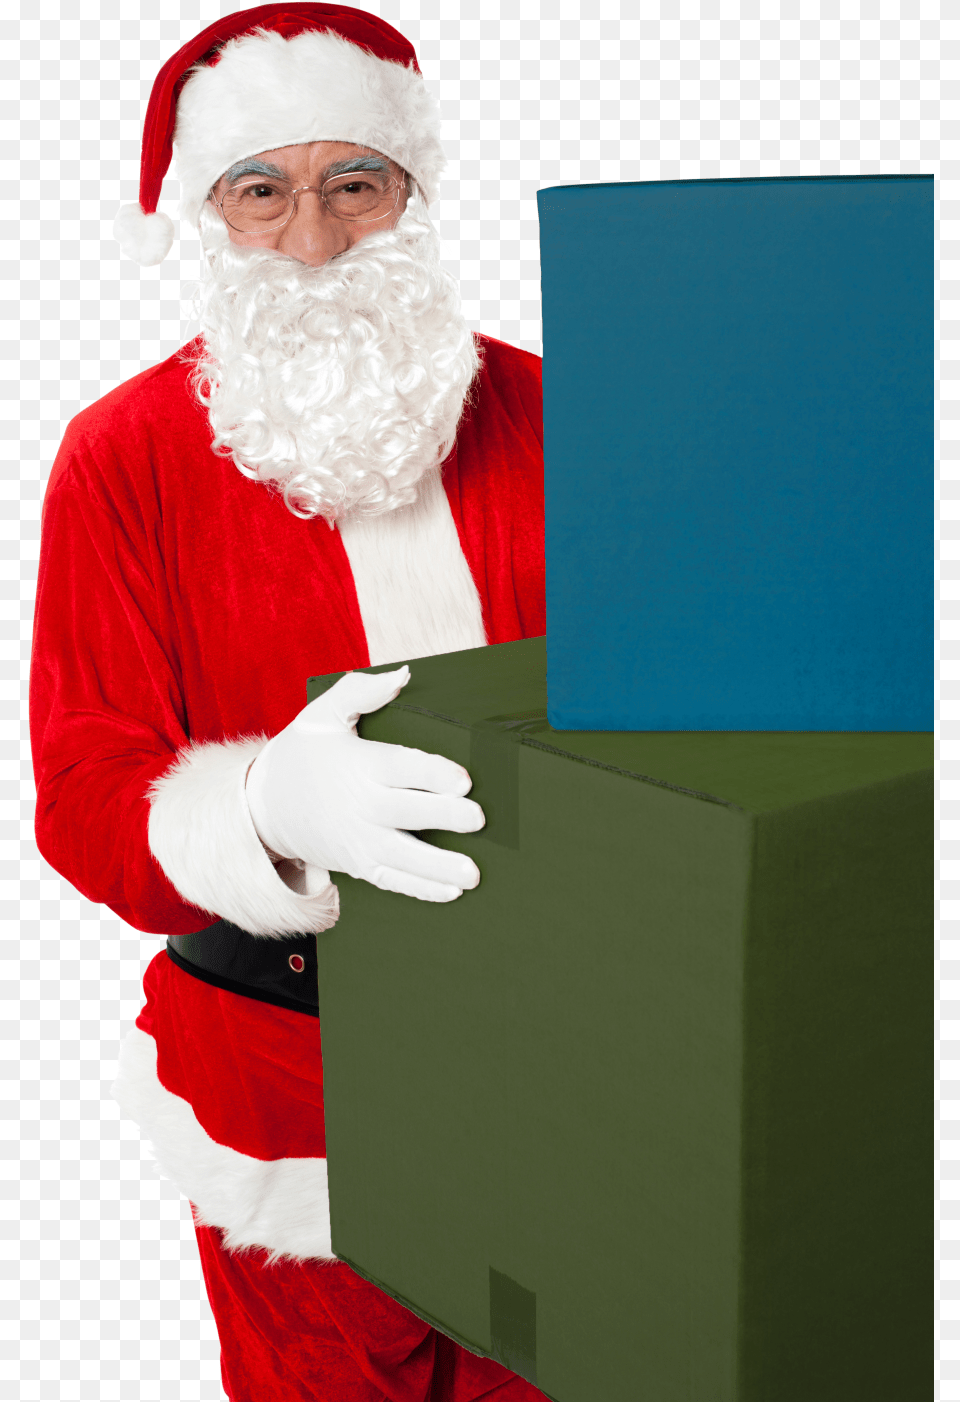 Santa Claus Holding Boxes Santa Claus, Glove, Clothing, Adult, Wedding Png